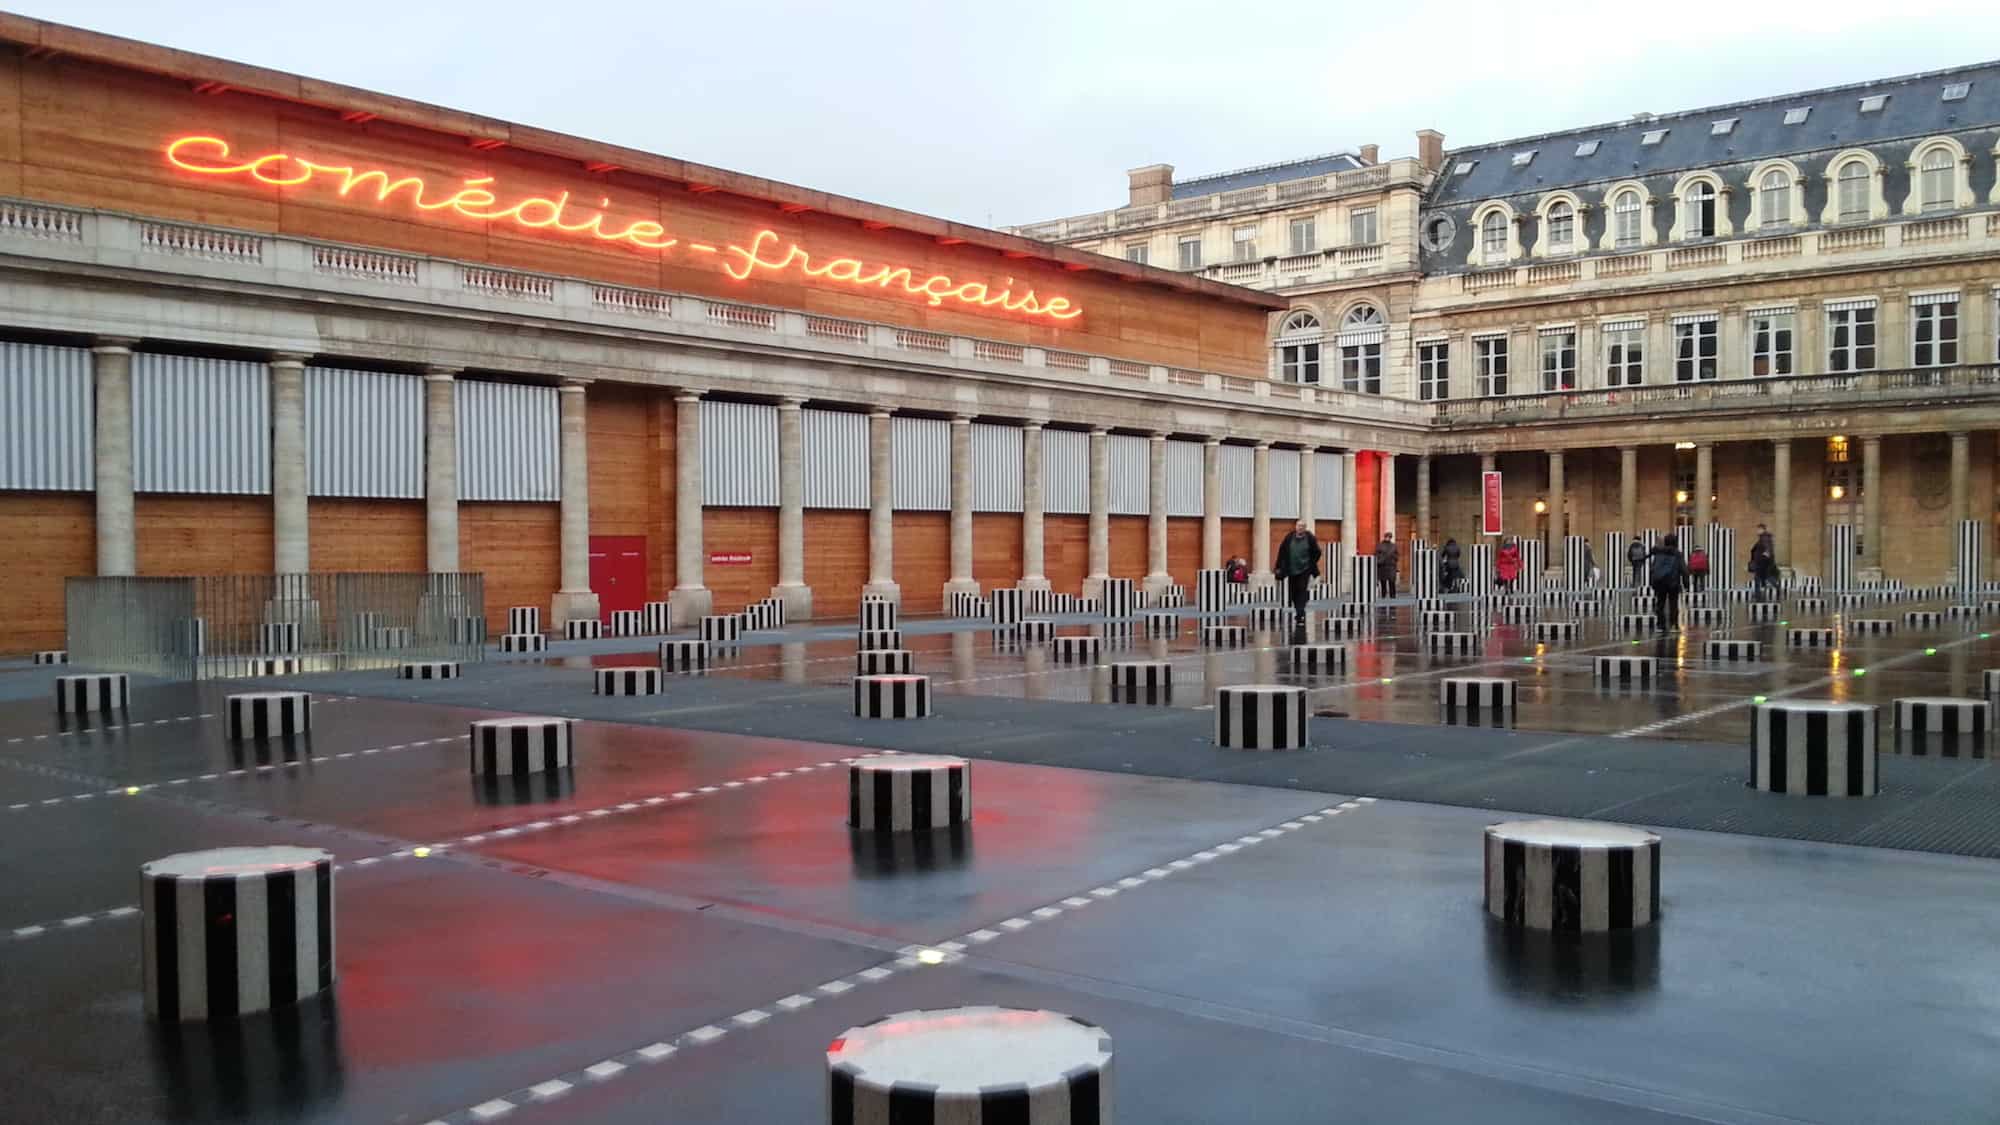 The Comédie Française theatre in Paris, puts on English plays and performances.